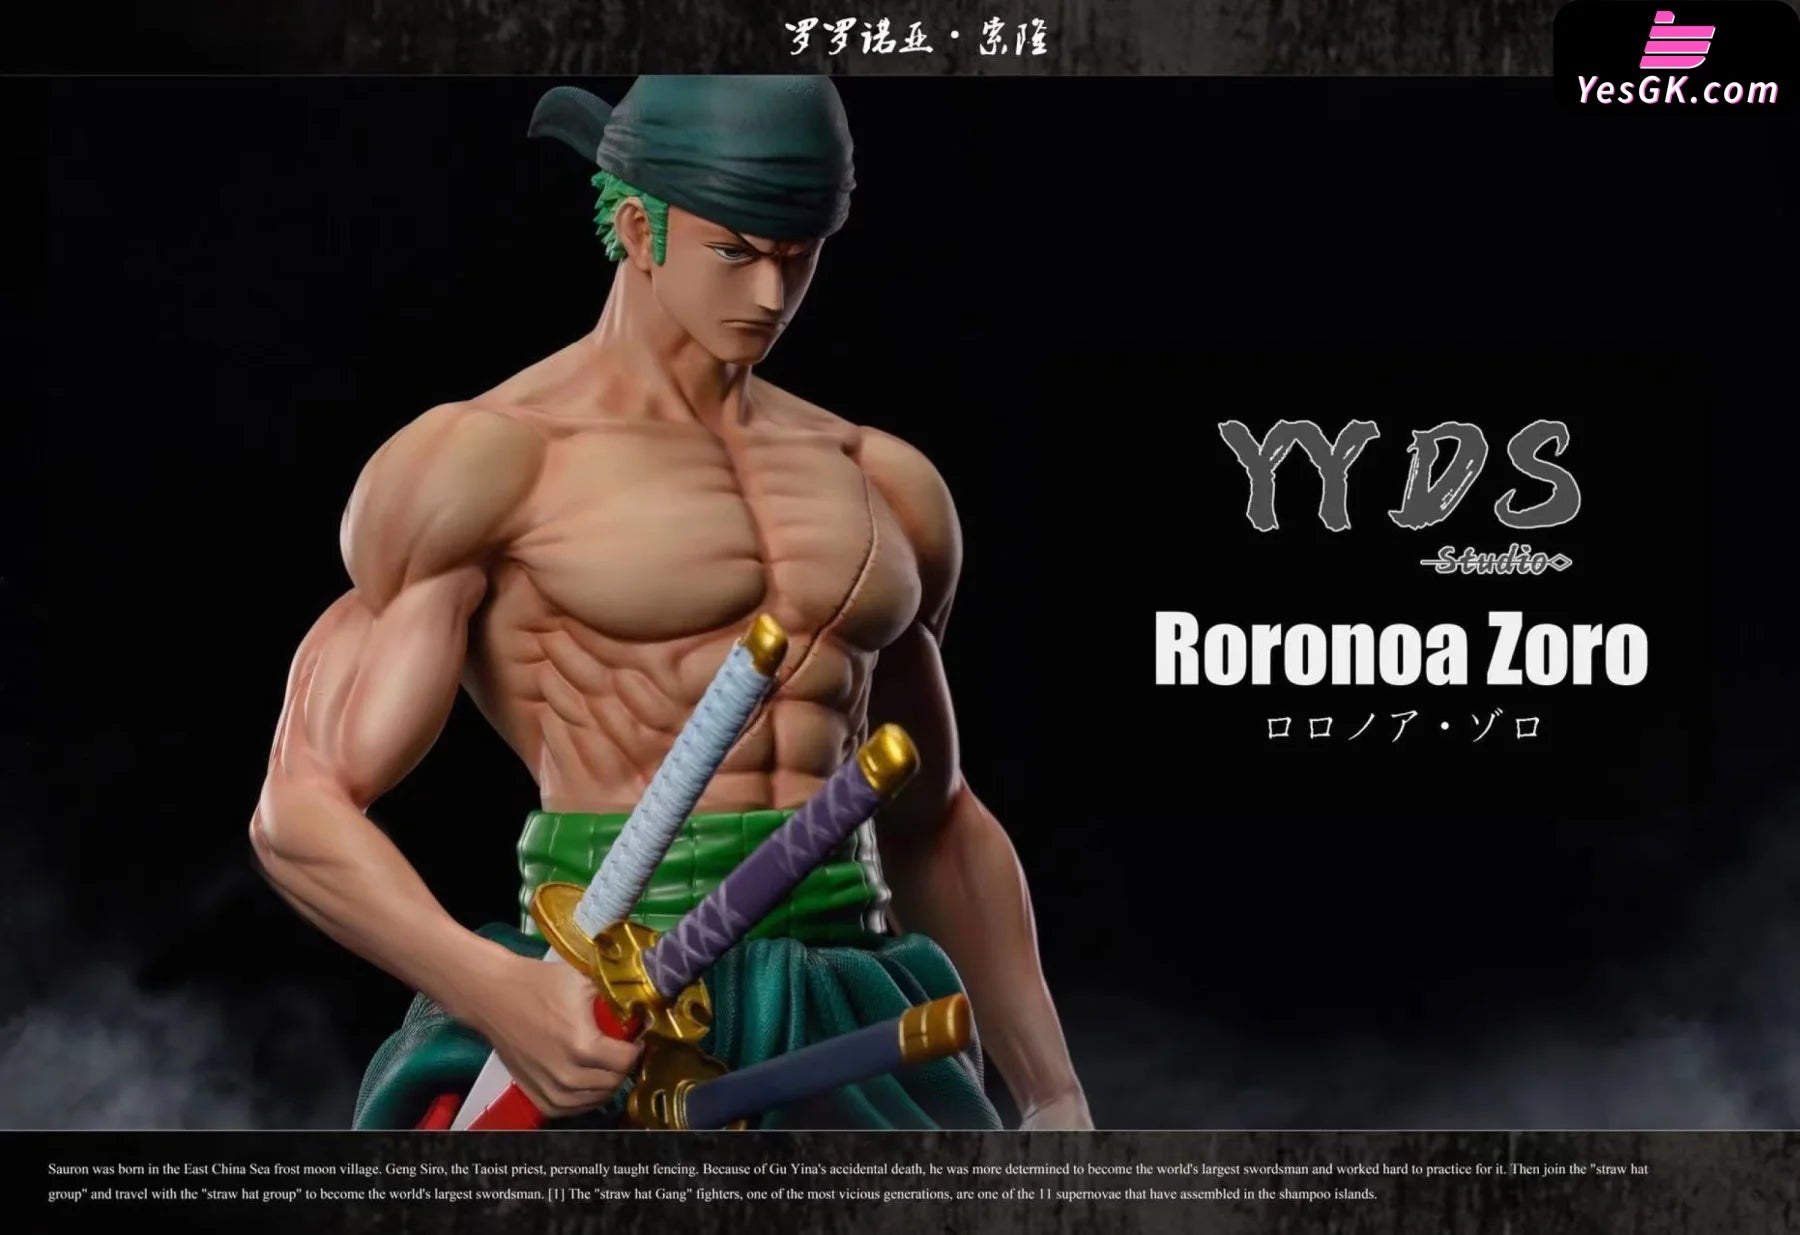 Action Figure - One Piece - Roronoa. Zoro - Memory Figure